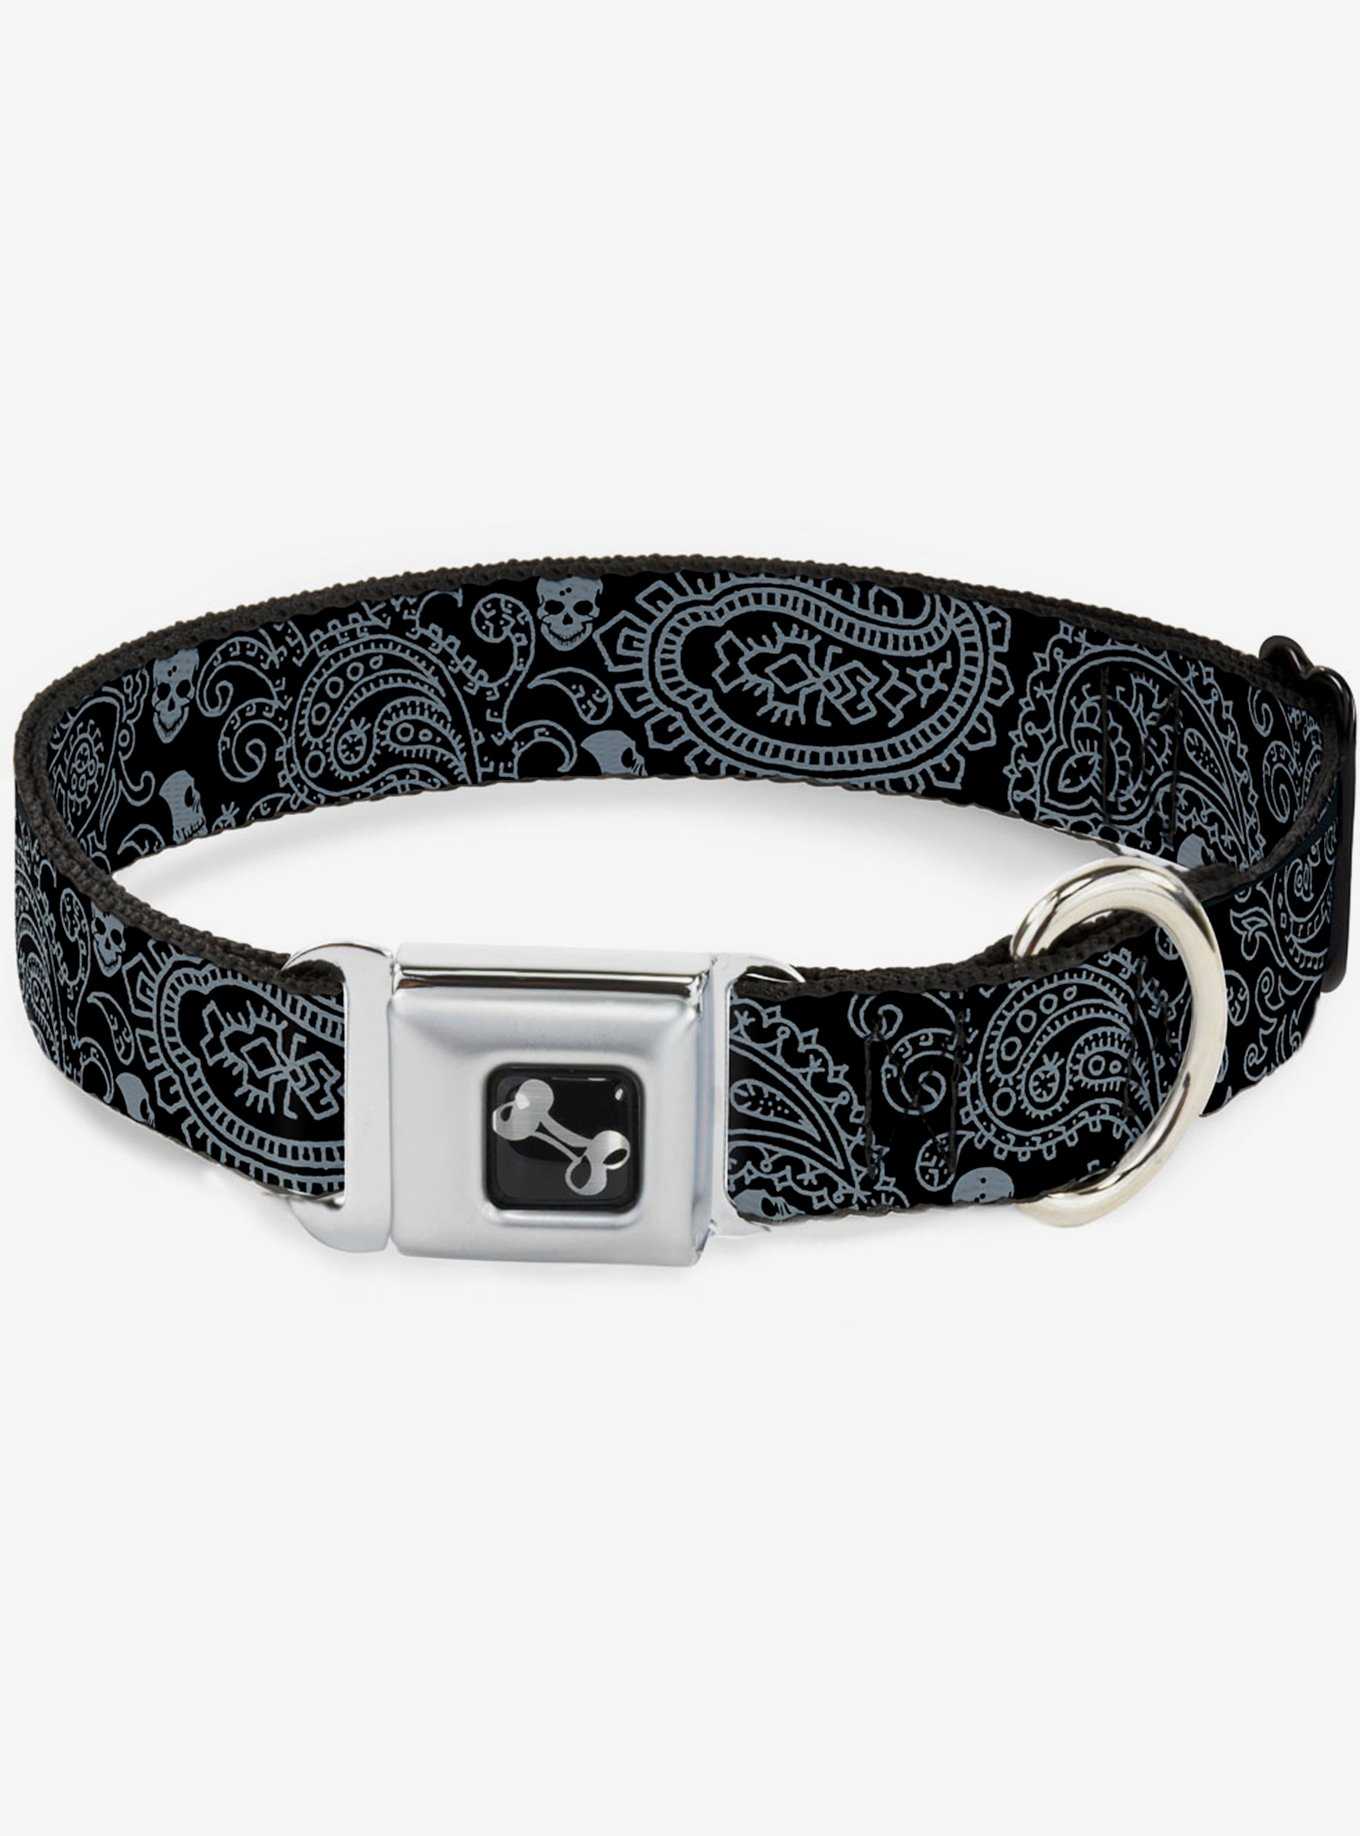 Bandana Skull Print Seatbelt Dog Collar Black Silver, , hi-res